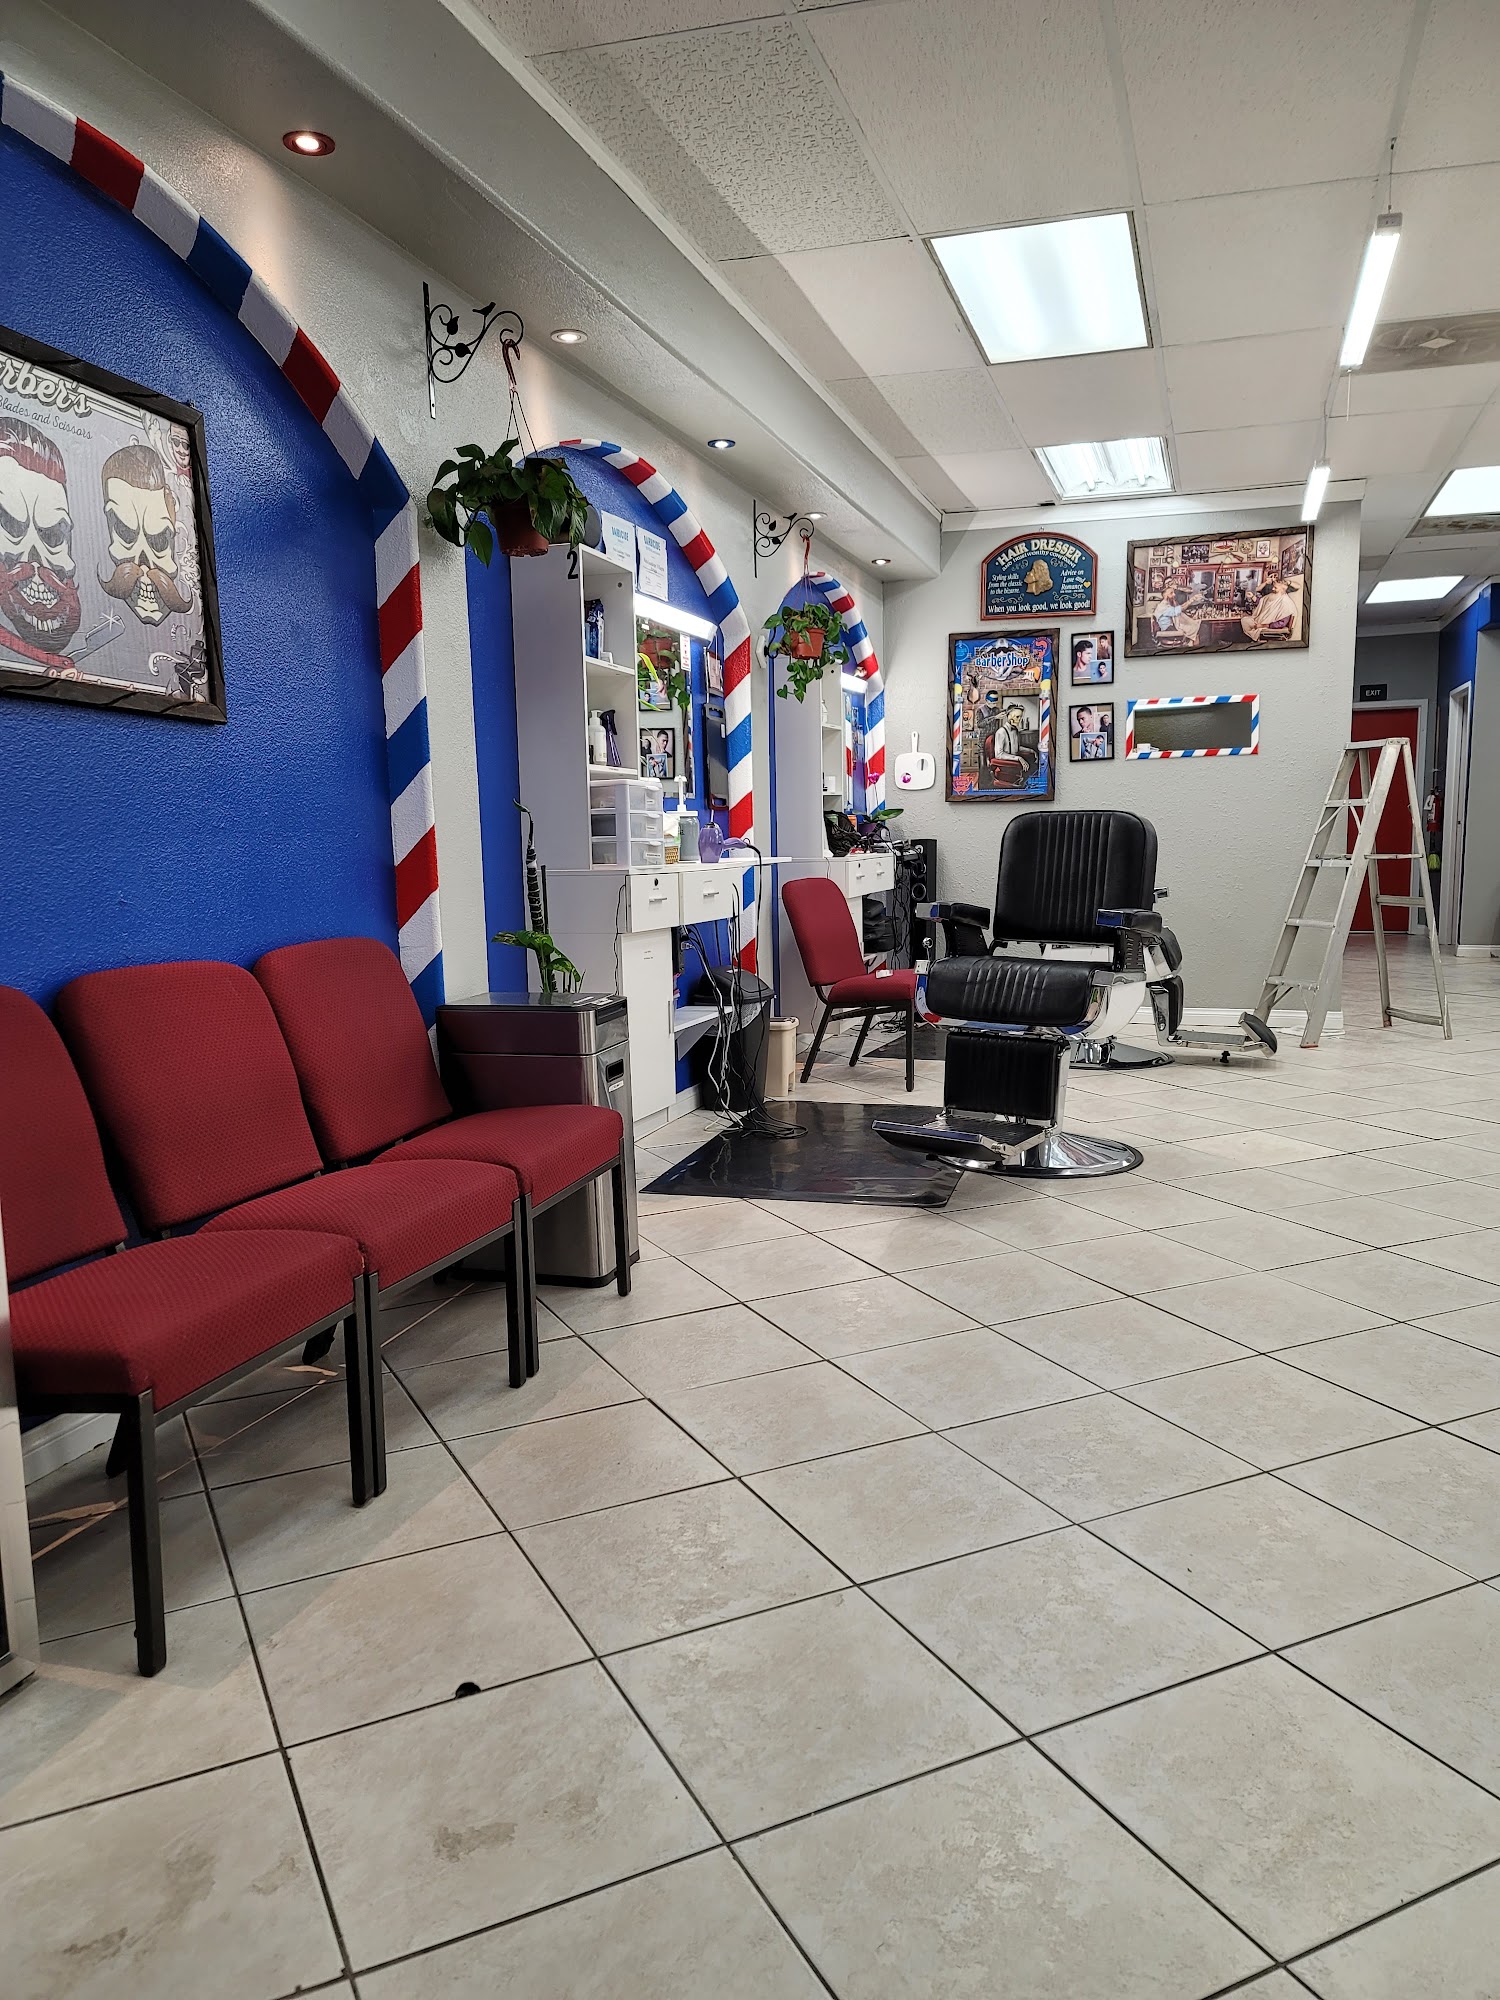 Great Cuts Barbershop